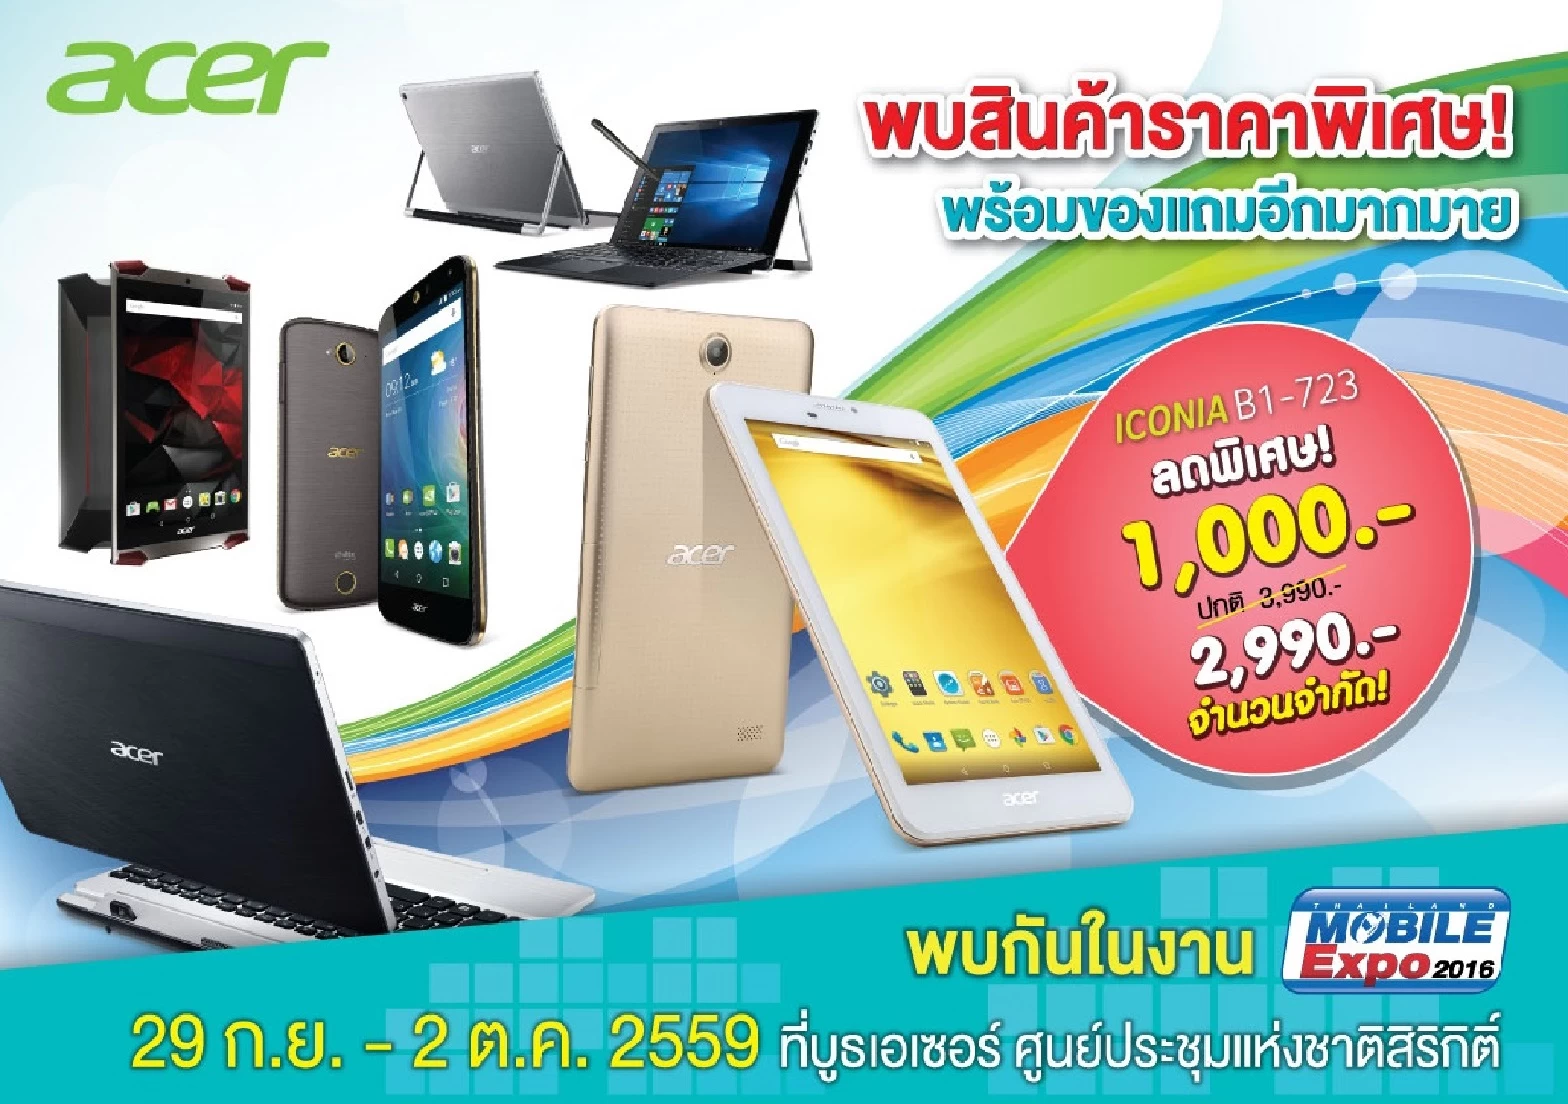 6 2 | Thailand Mobile Expo | รวมโปรฯแรง โปรฯเด็ดจาก Acer ในงาน Thailand Mobile Expo 2016